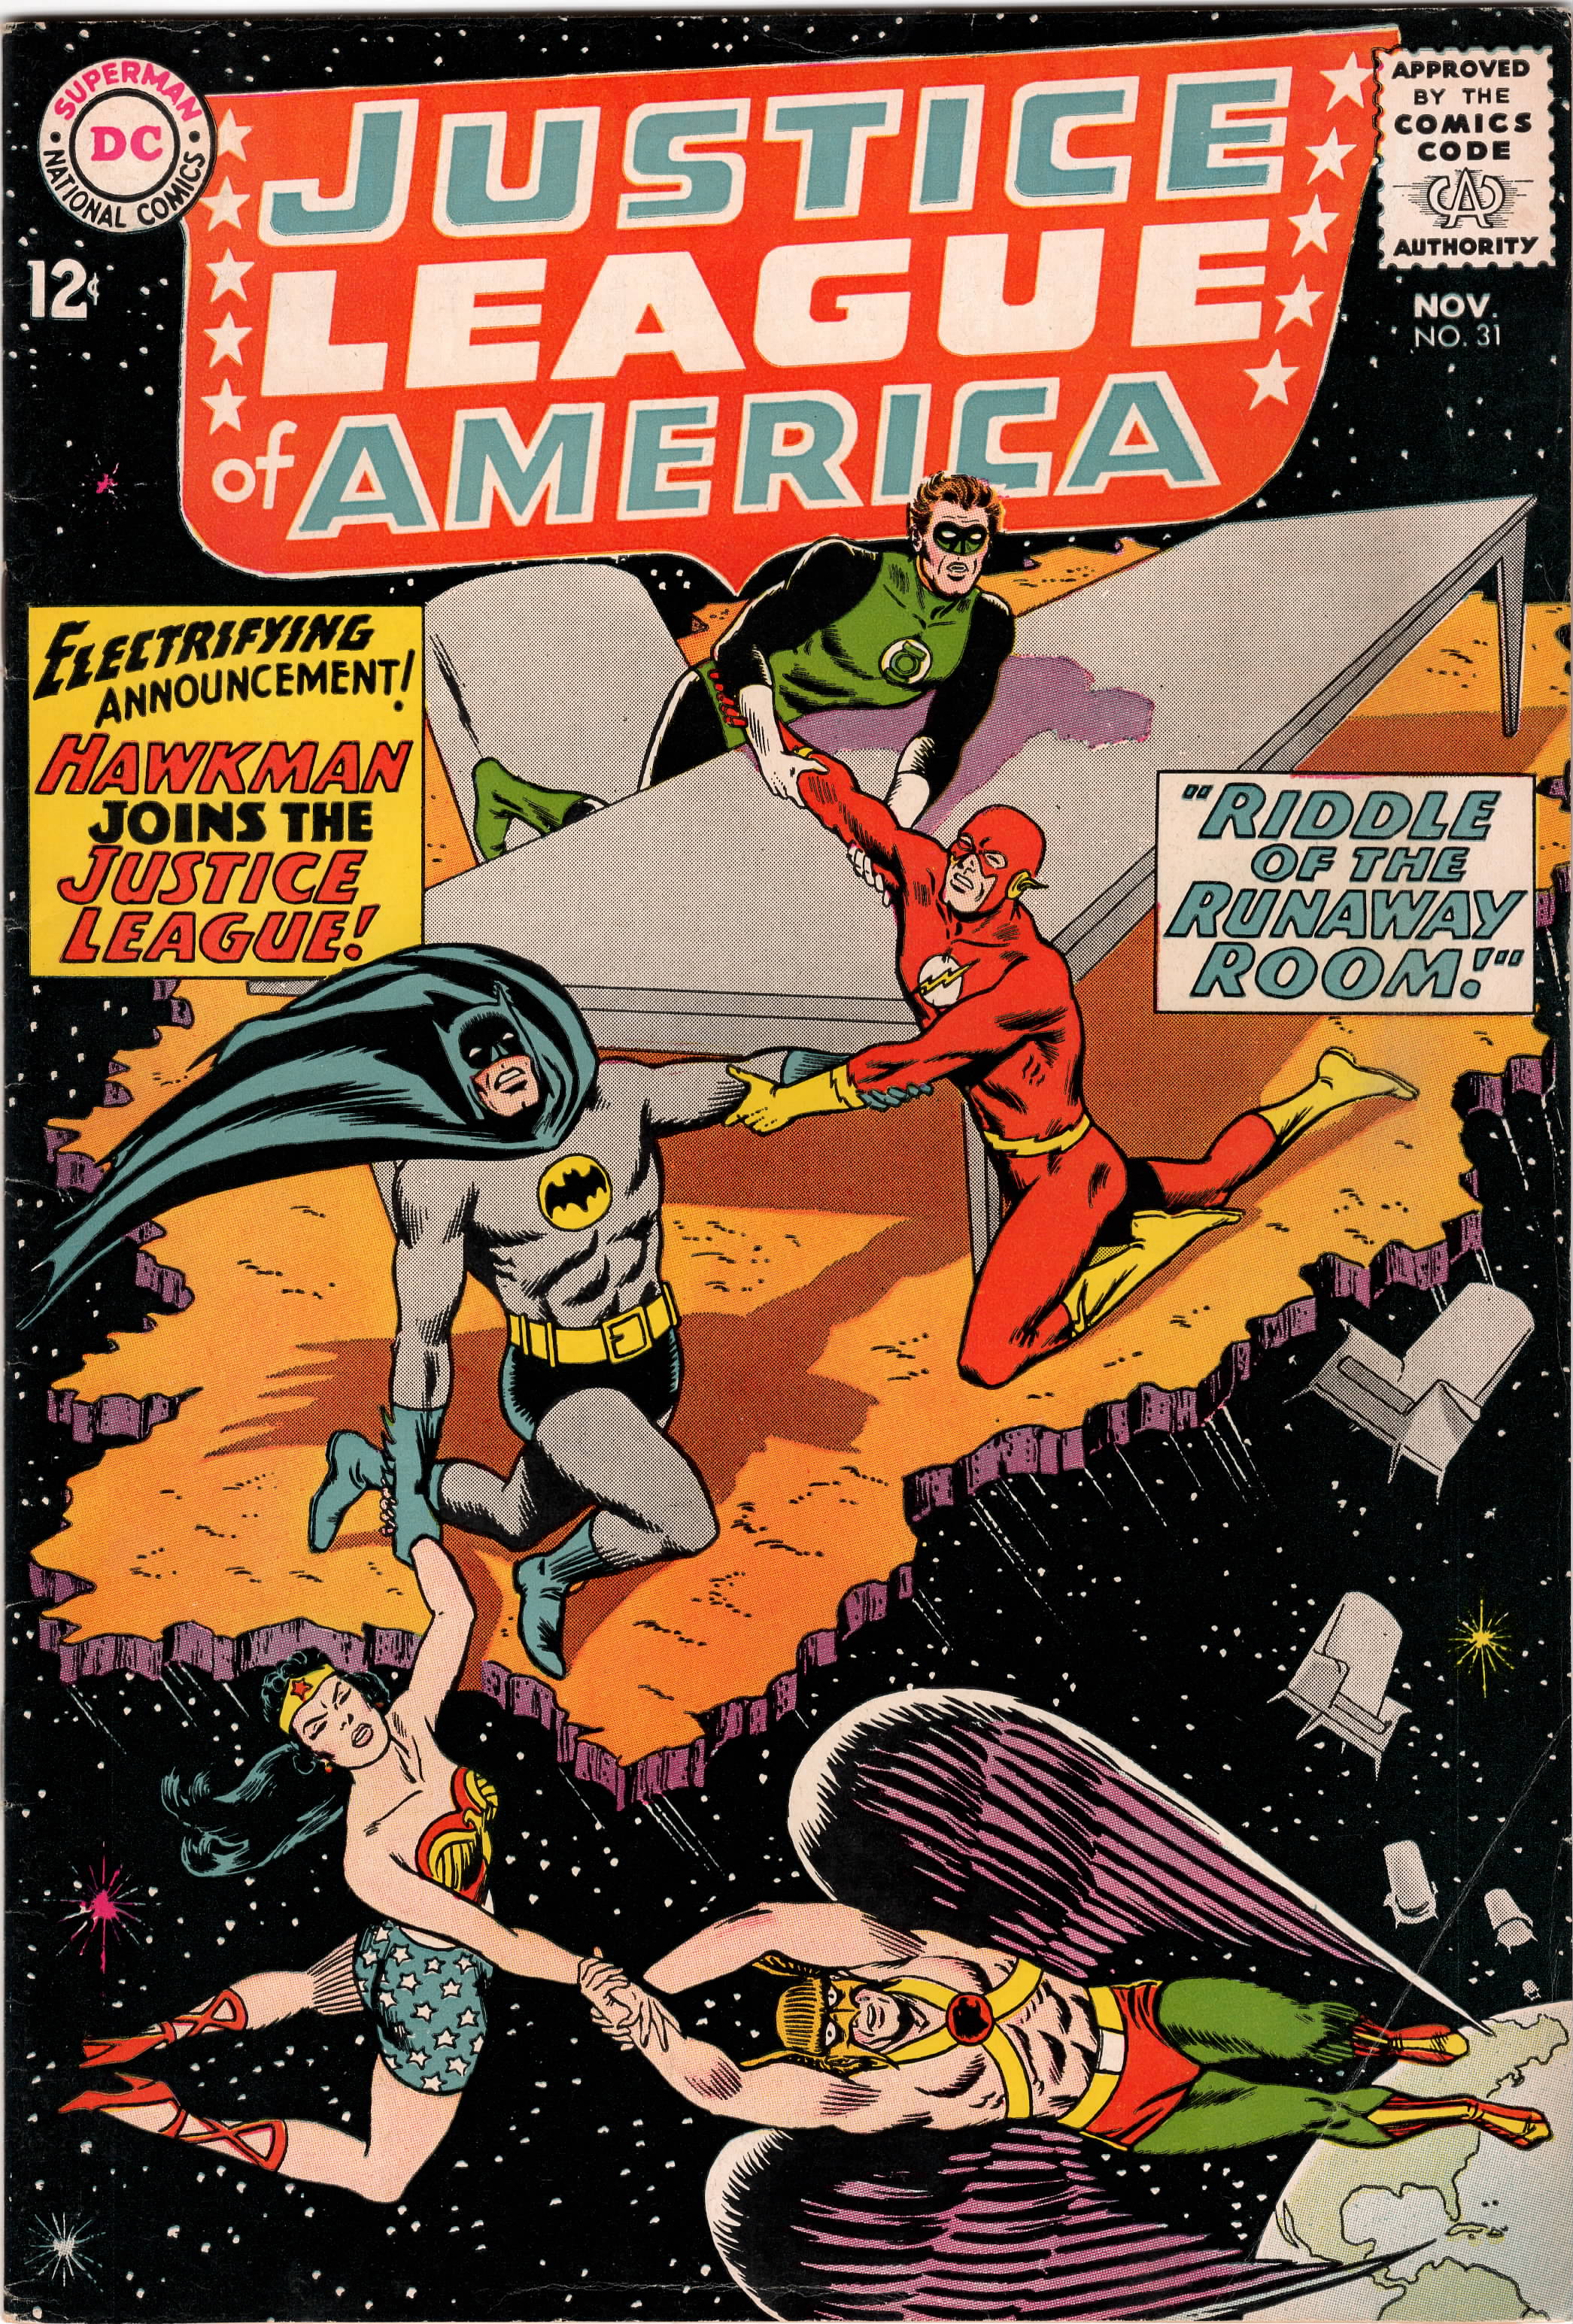 Justice League of America #031